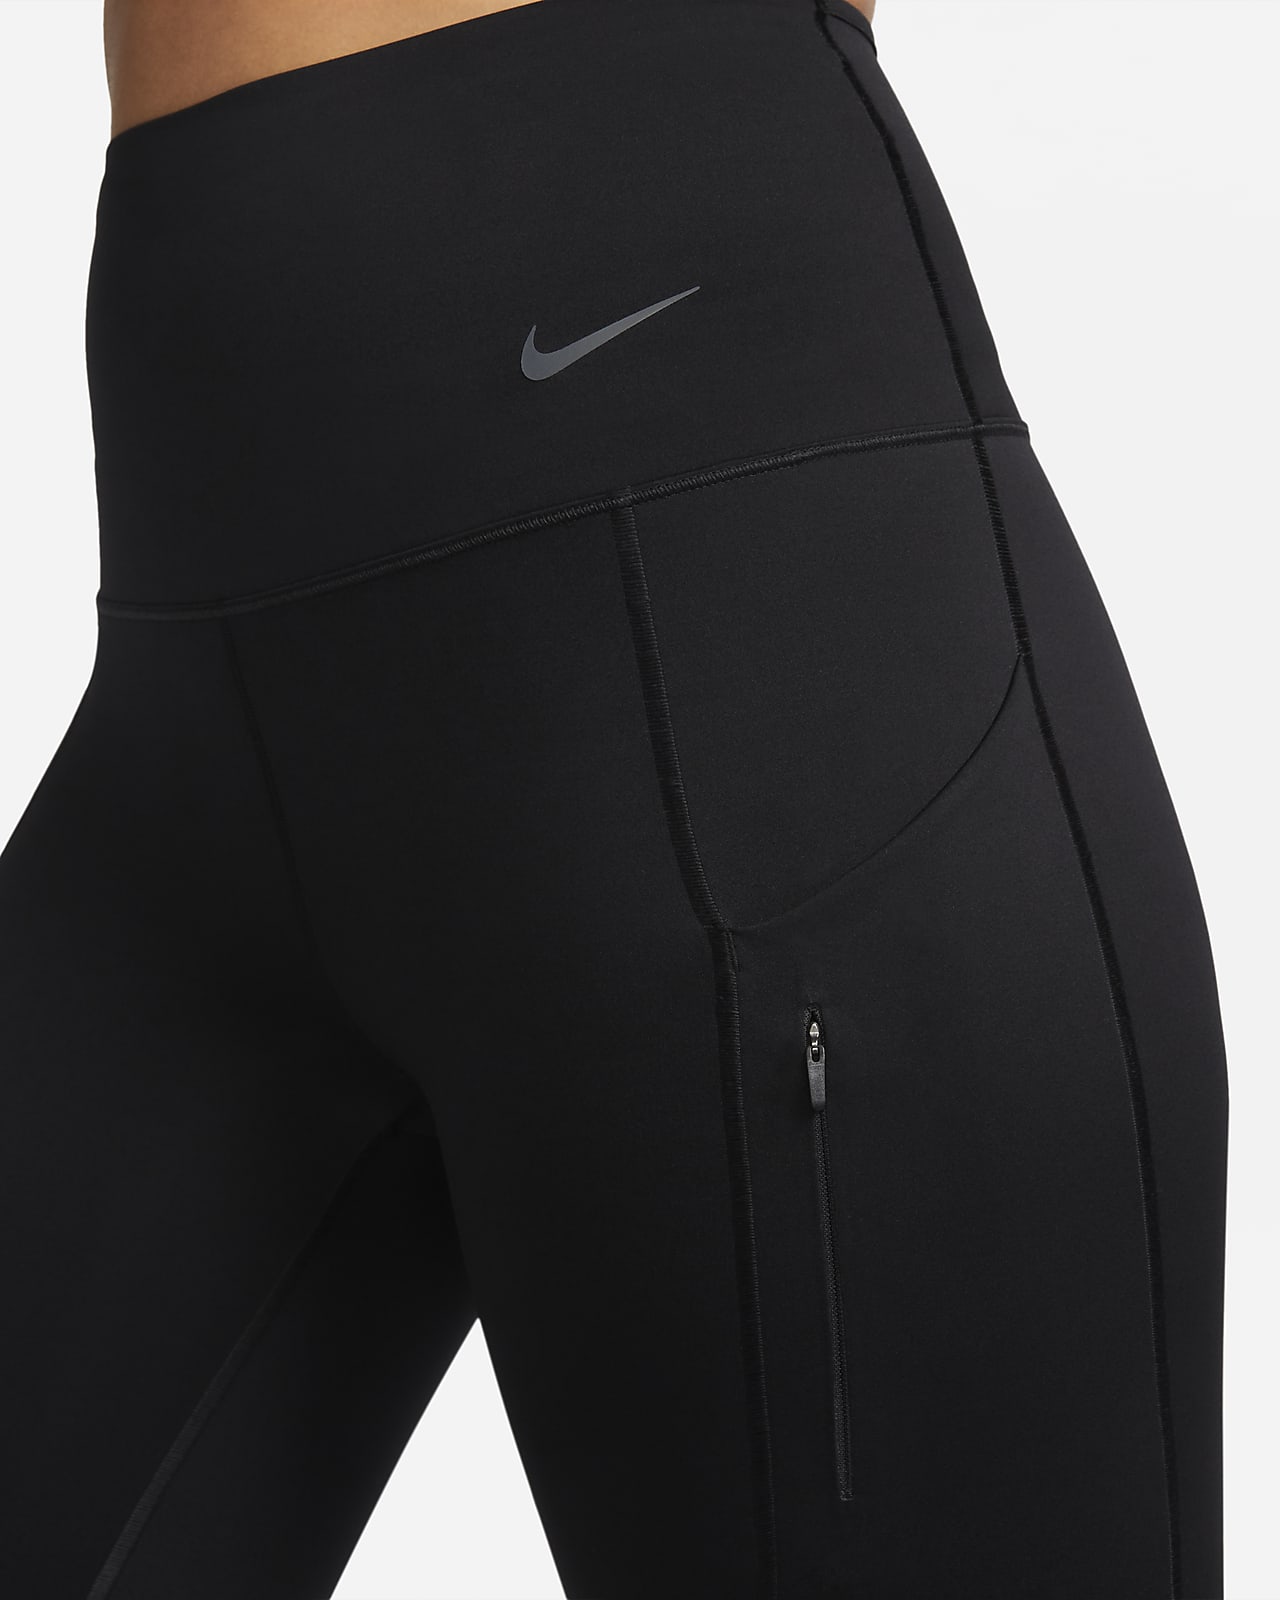 Nike Training one tight cropped legging with logo taping in black.  #niketraining #activewear